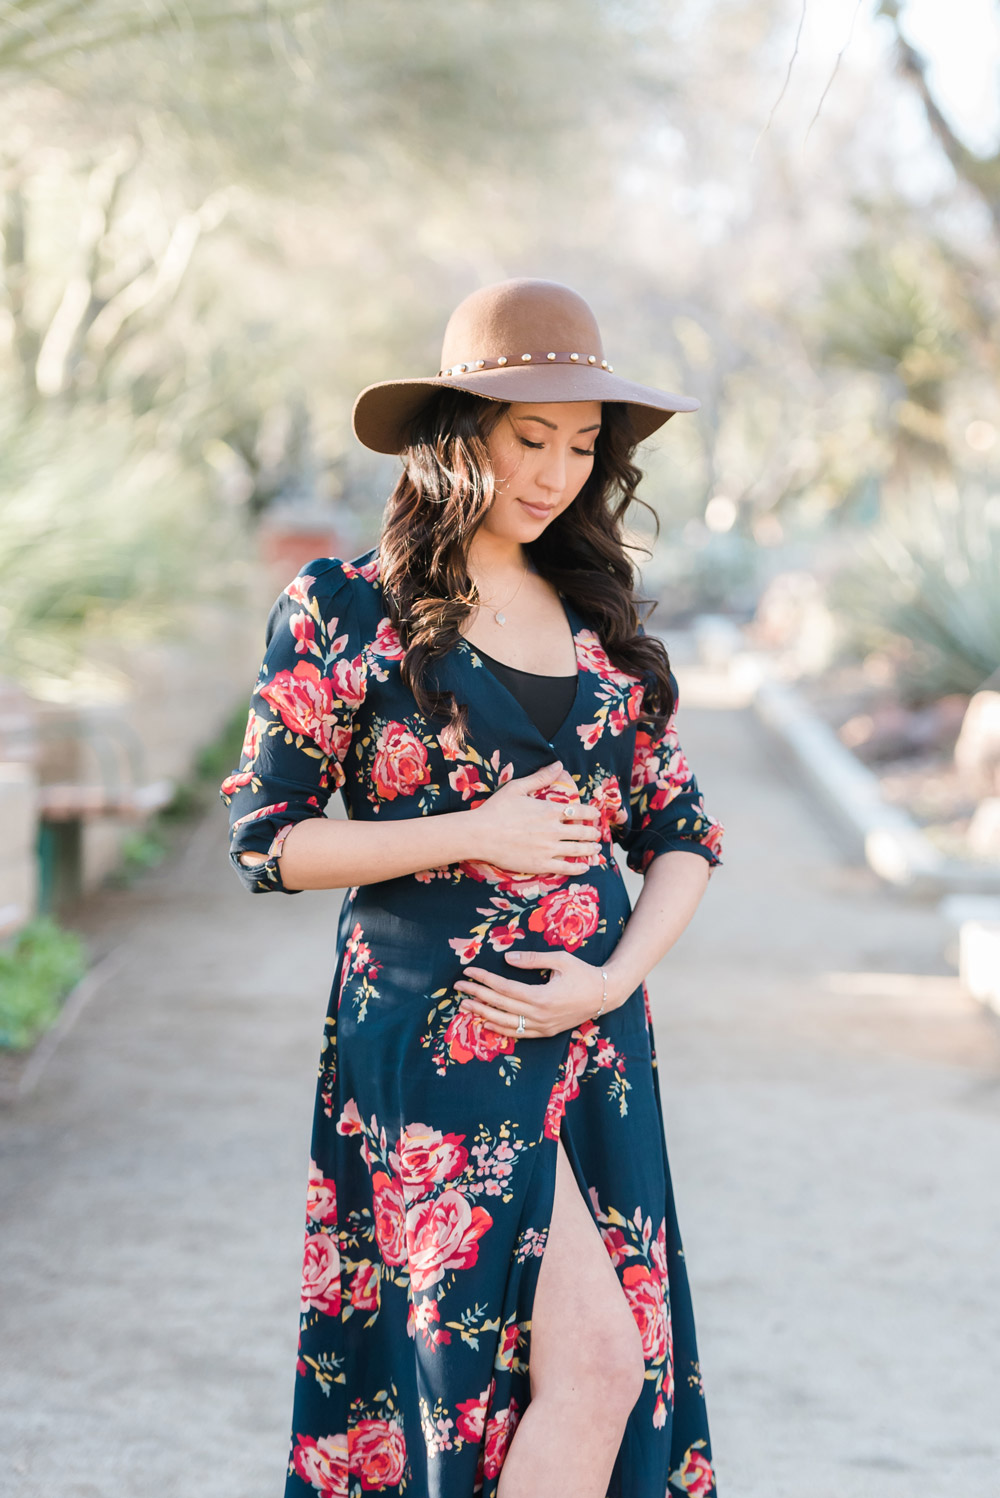 Springs Preserve Maternity Session | Kristen Marie Weddings + Portraits | Las Vegas Maternity Photographer